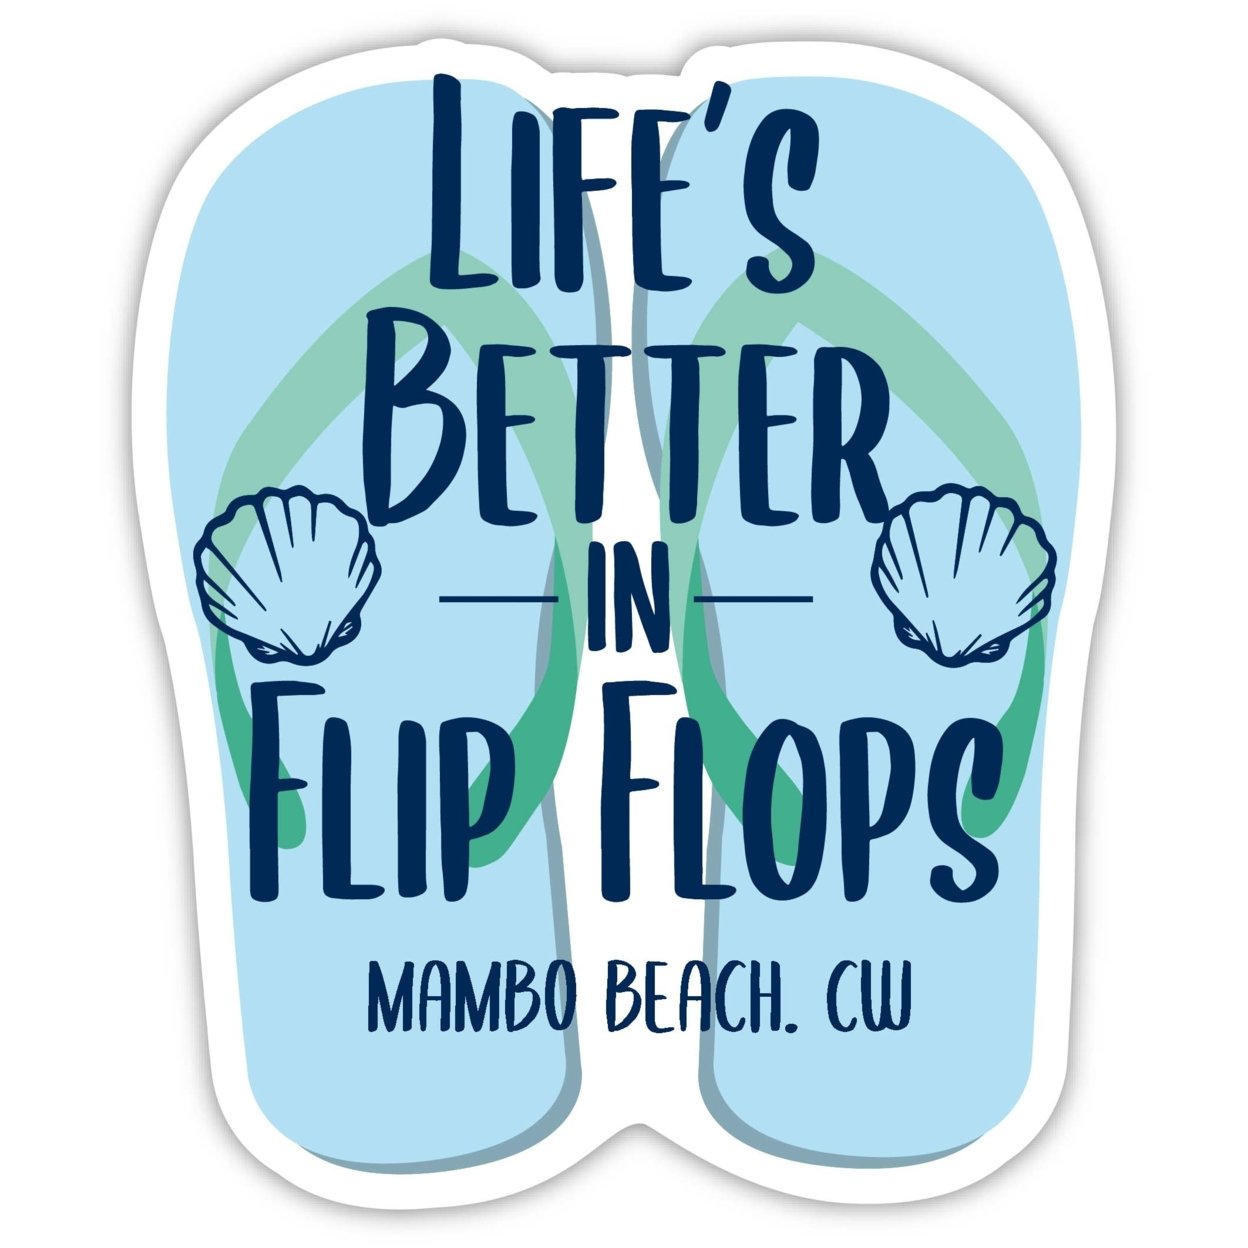 Mambo Beach CuraÃ§ao Souvenir 4 Inch Vinyl Decal Sticker Flip Flop Design